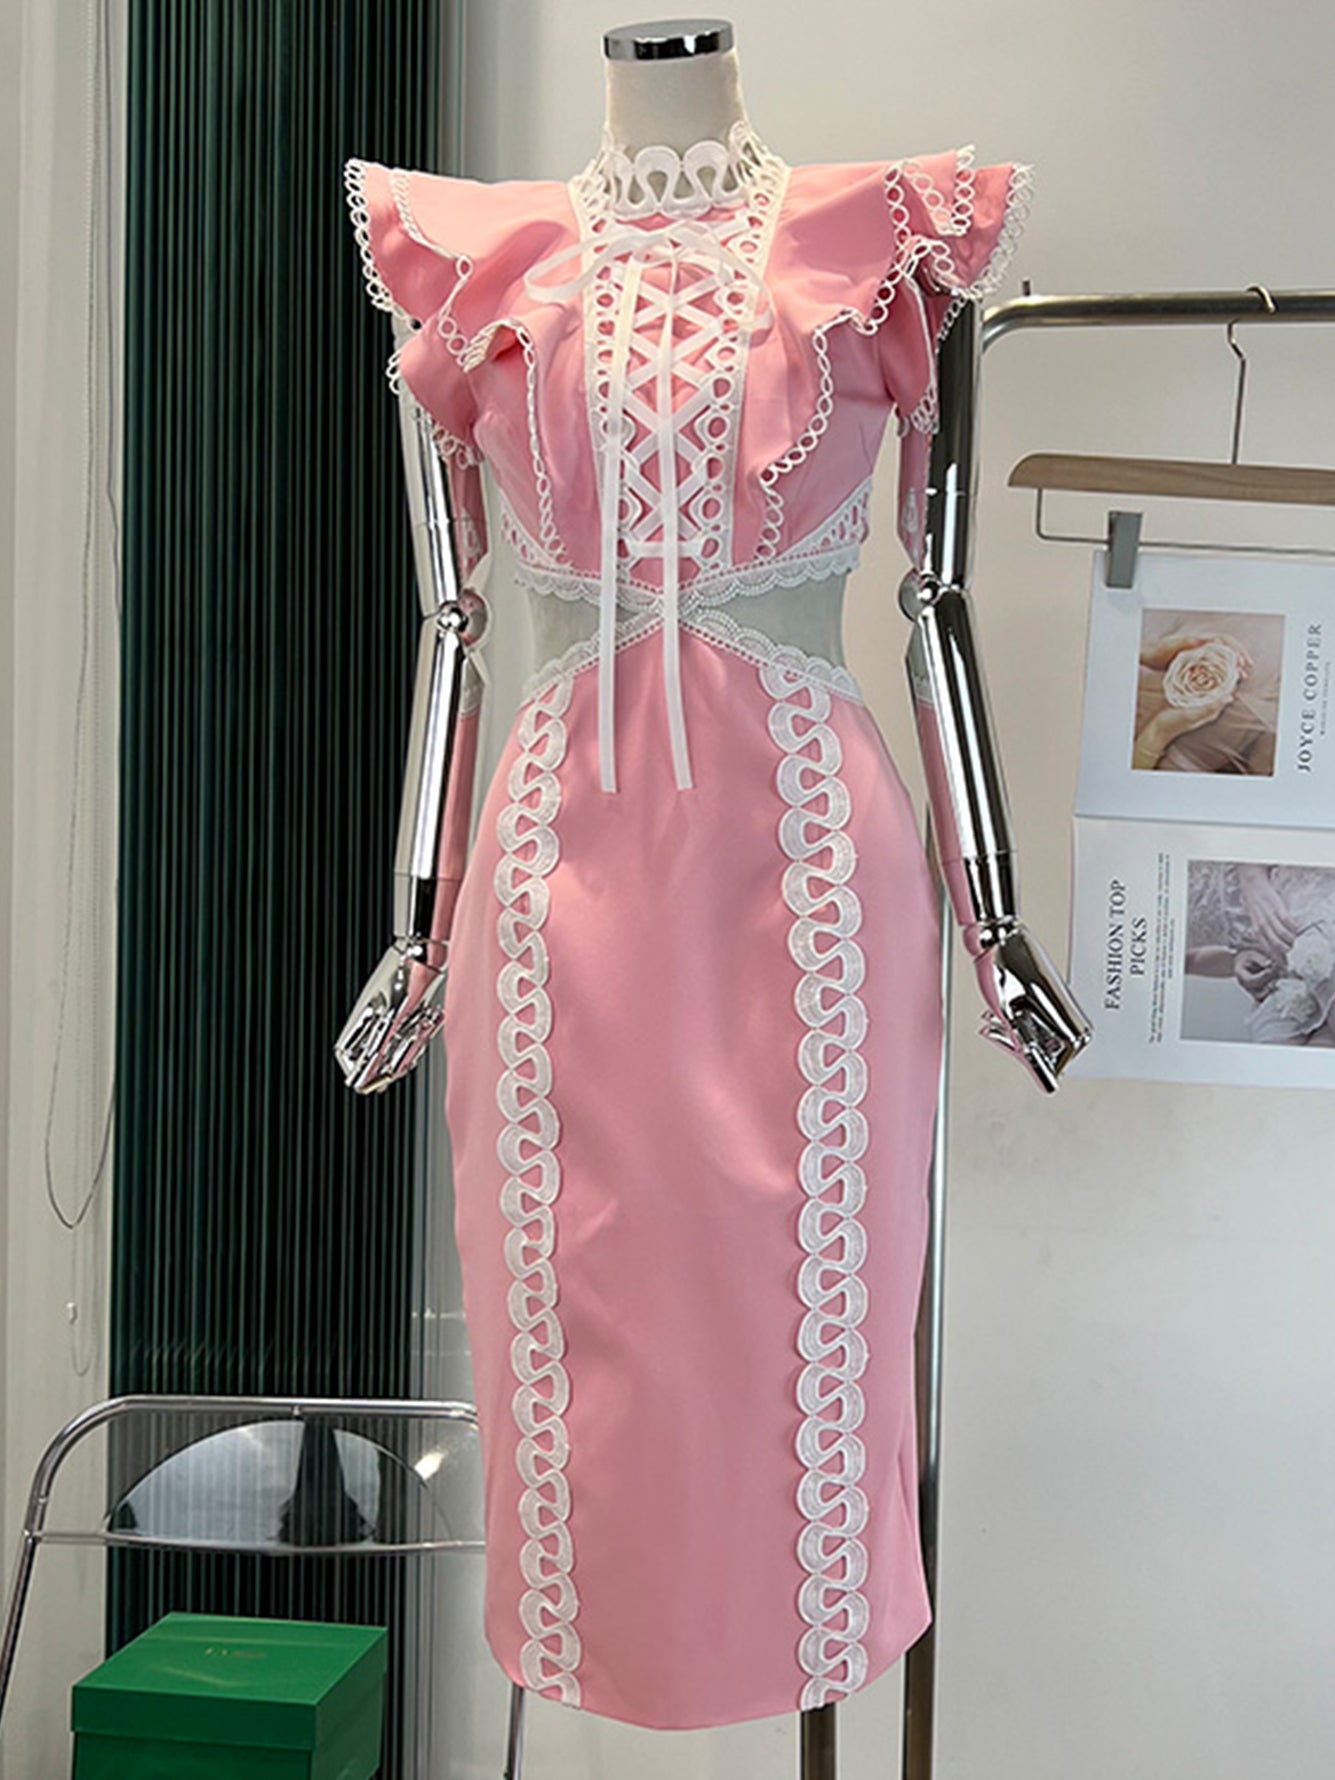 Pink Dress Women Sexy Hollow Out Lace Ruffle Bodycon Midi